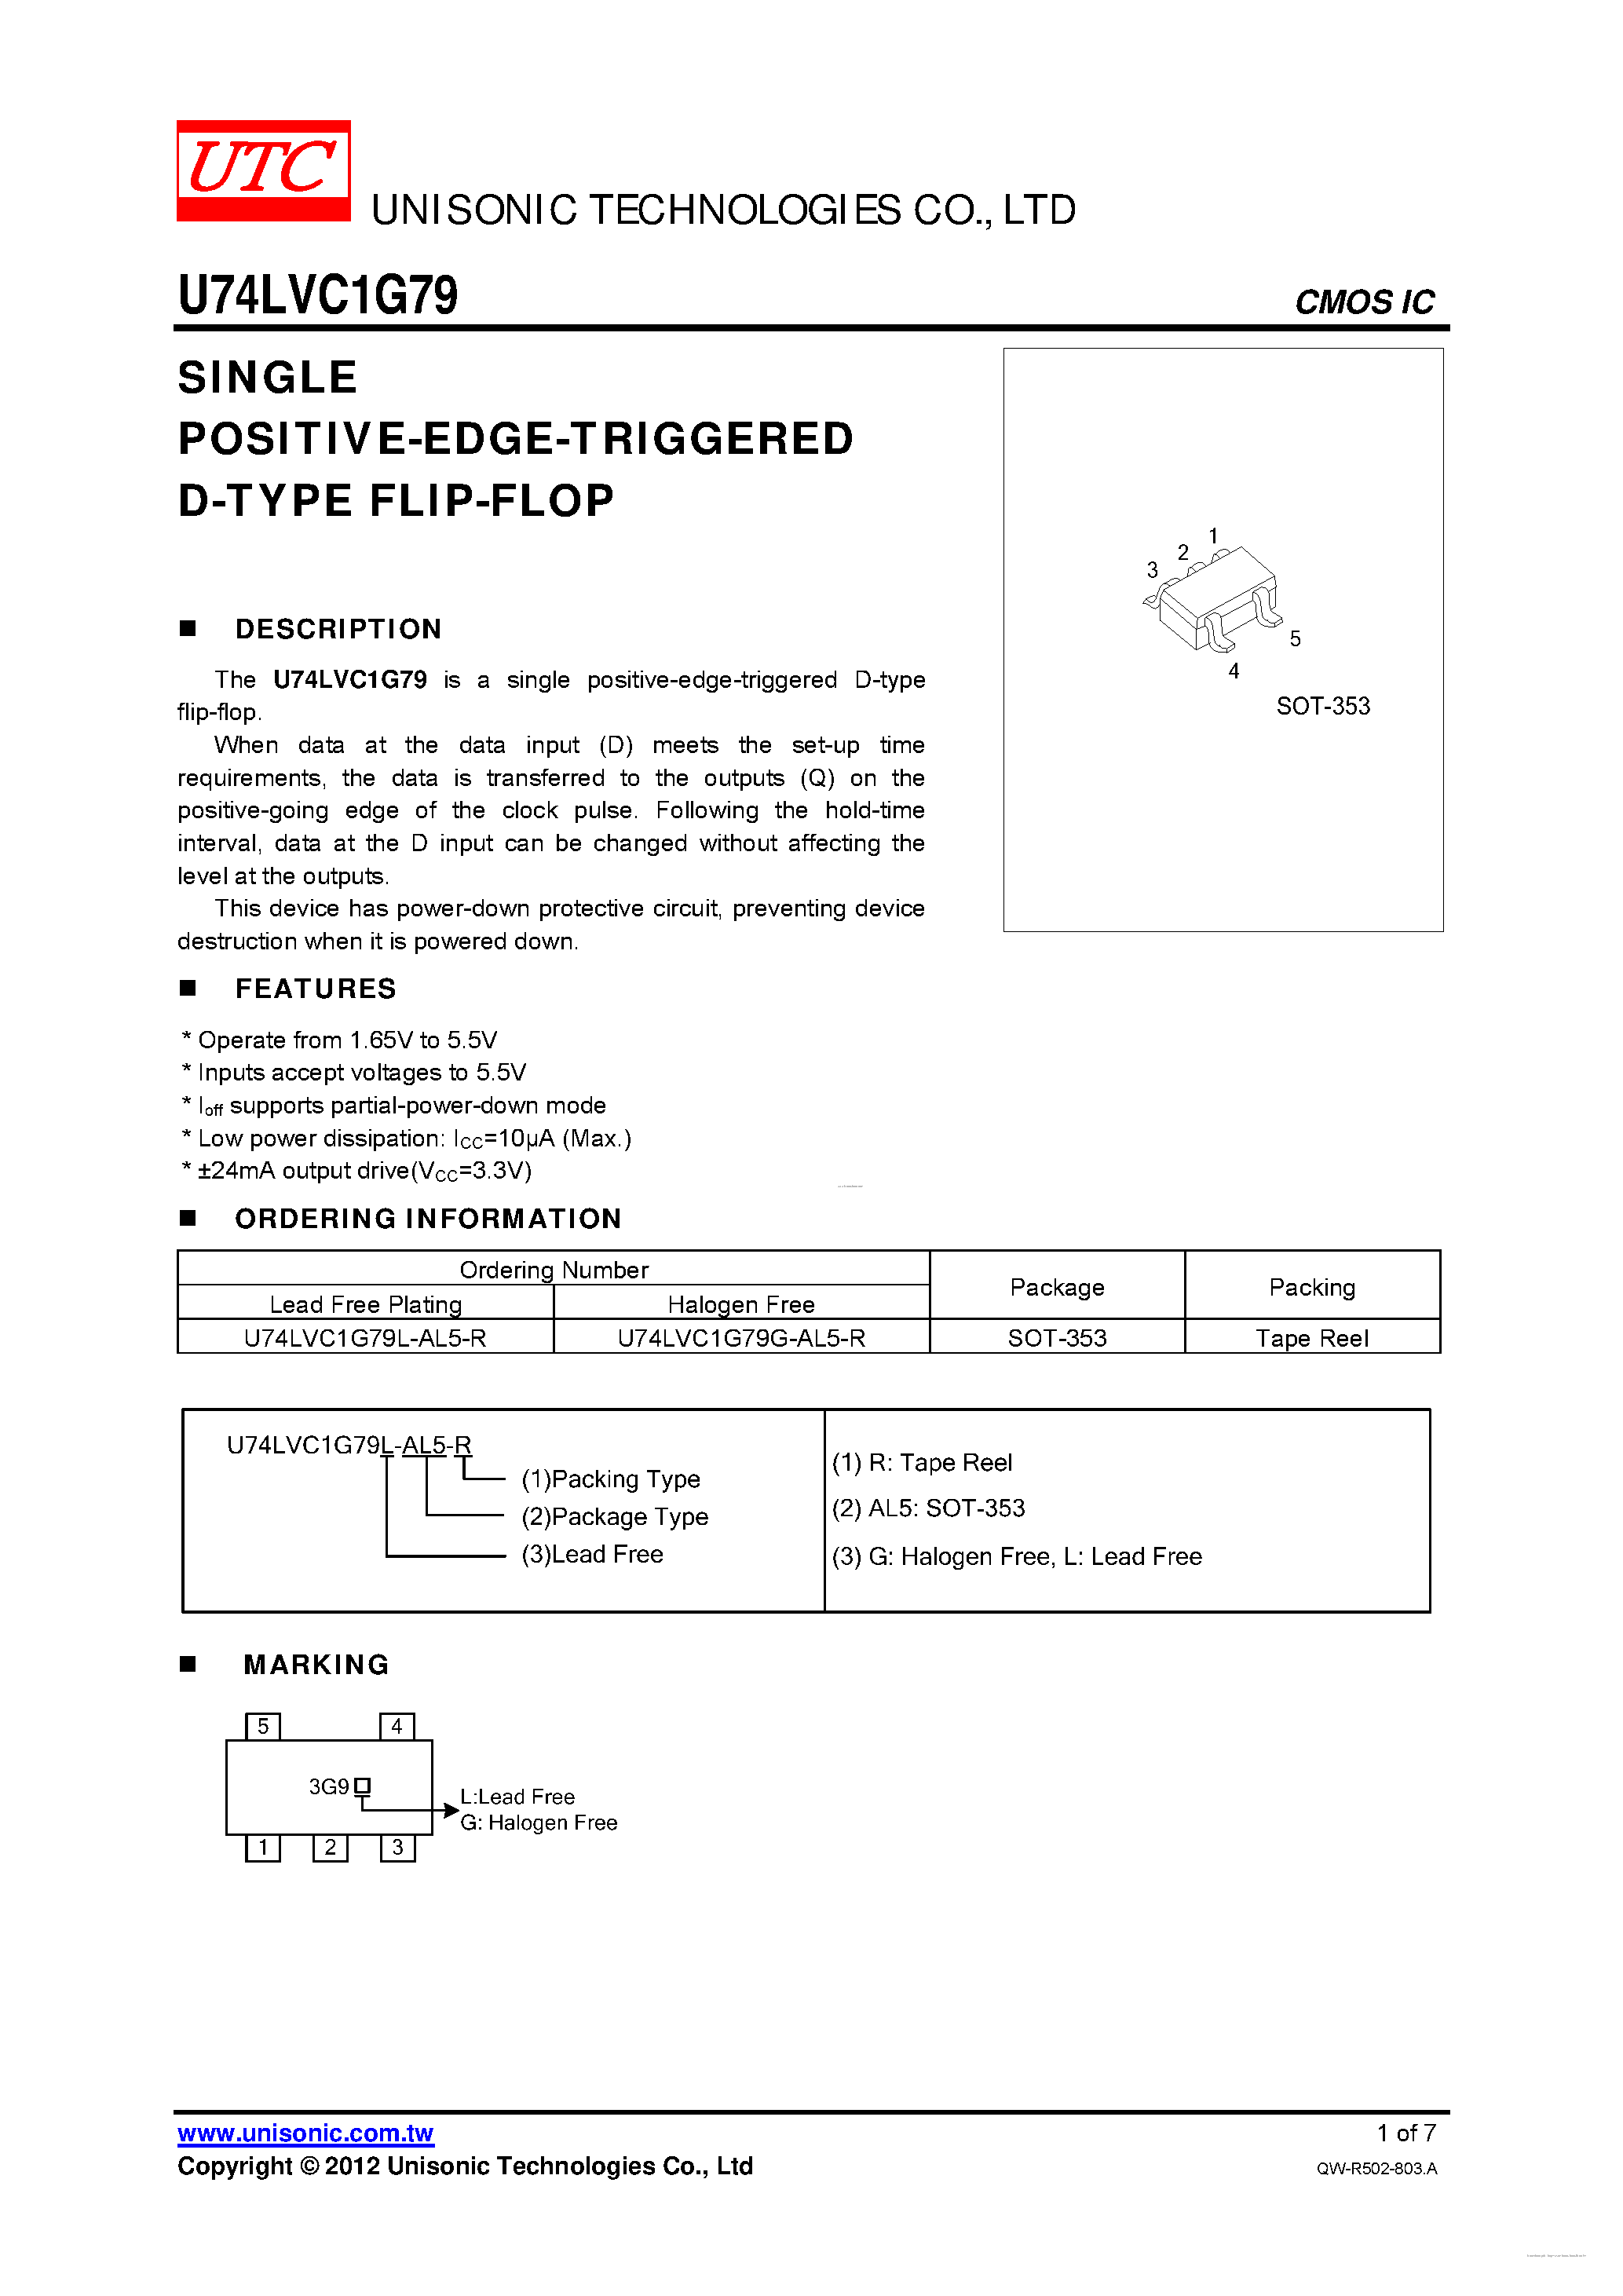 Datasheet U74LVC1G79 - SINGLE POSITIVE-EDGE-TRIGGERED D-TYPE FLIP-FLOP page 1